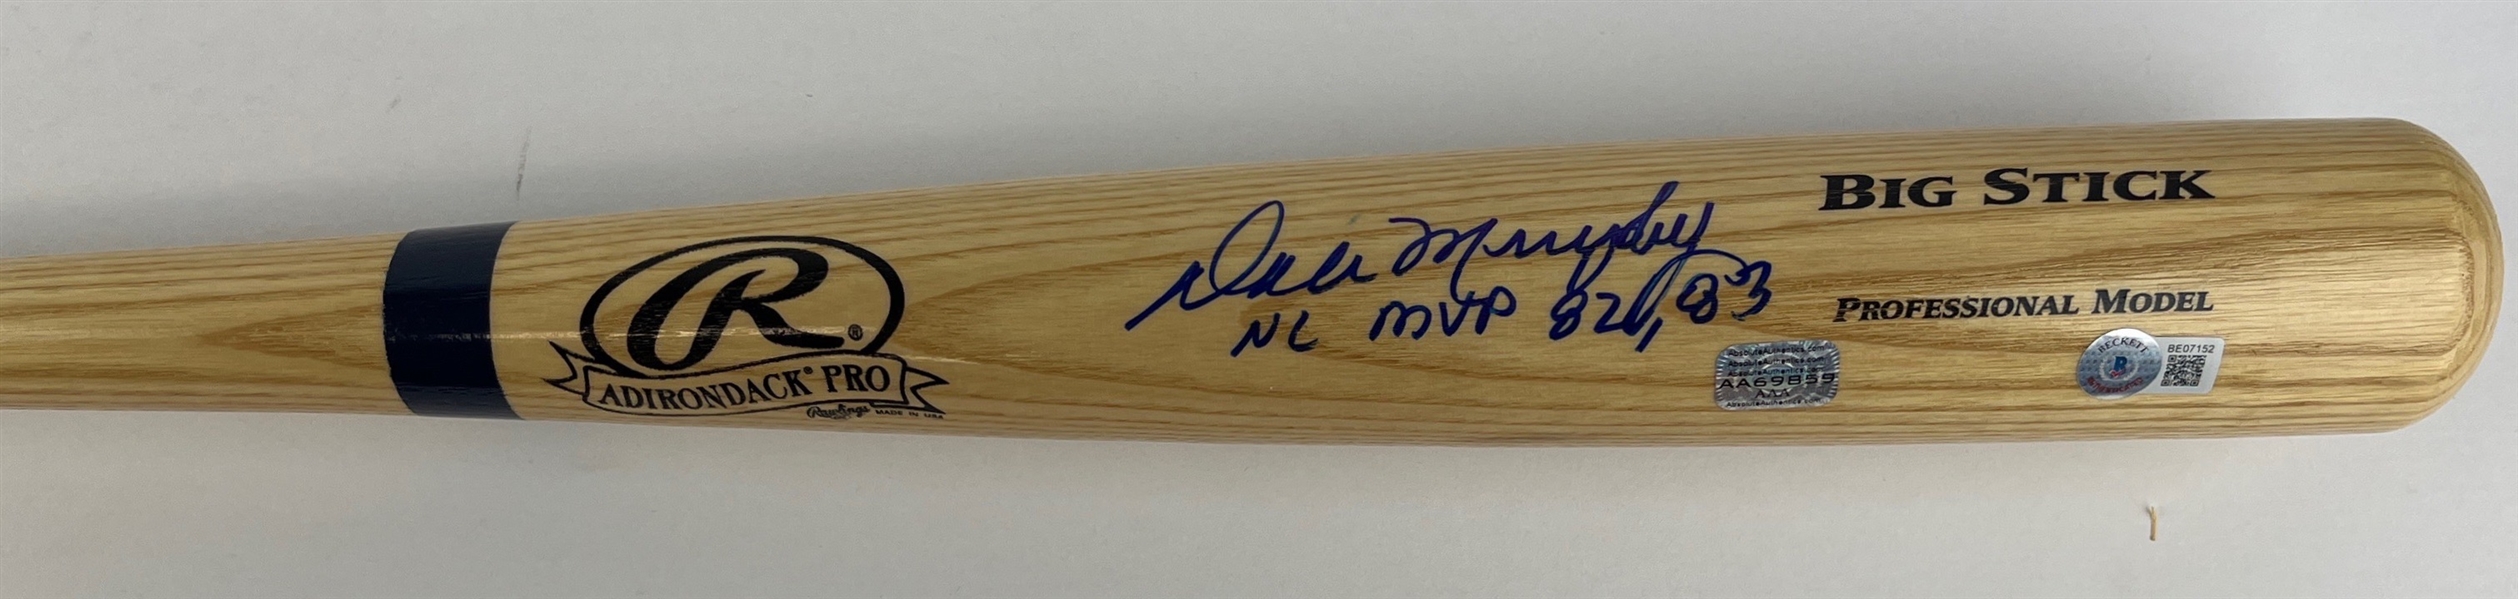 Dale Murphy Signed & Inscribed Big Stick Baseball Bat (Beckett/BAS)